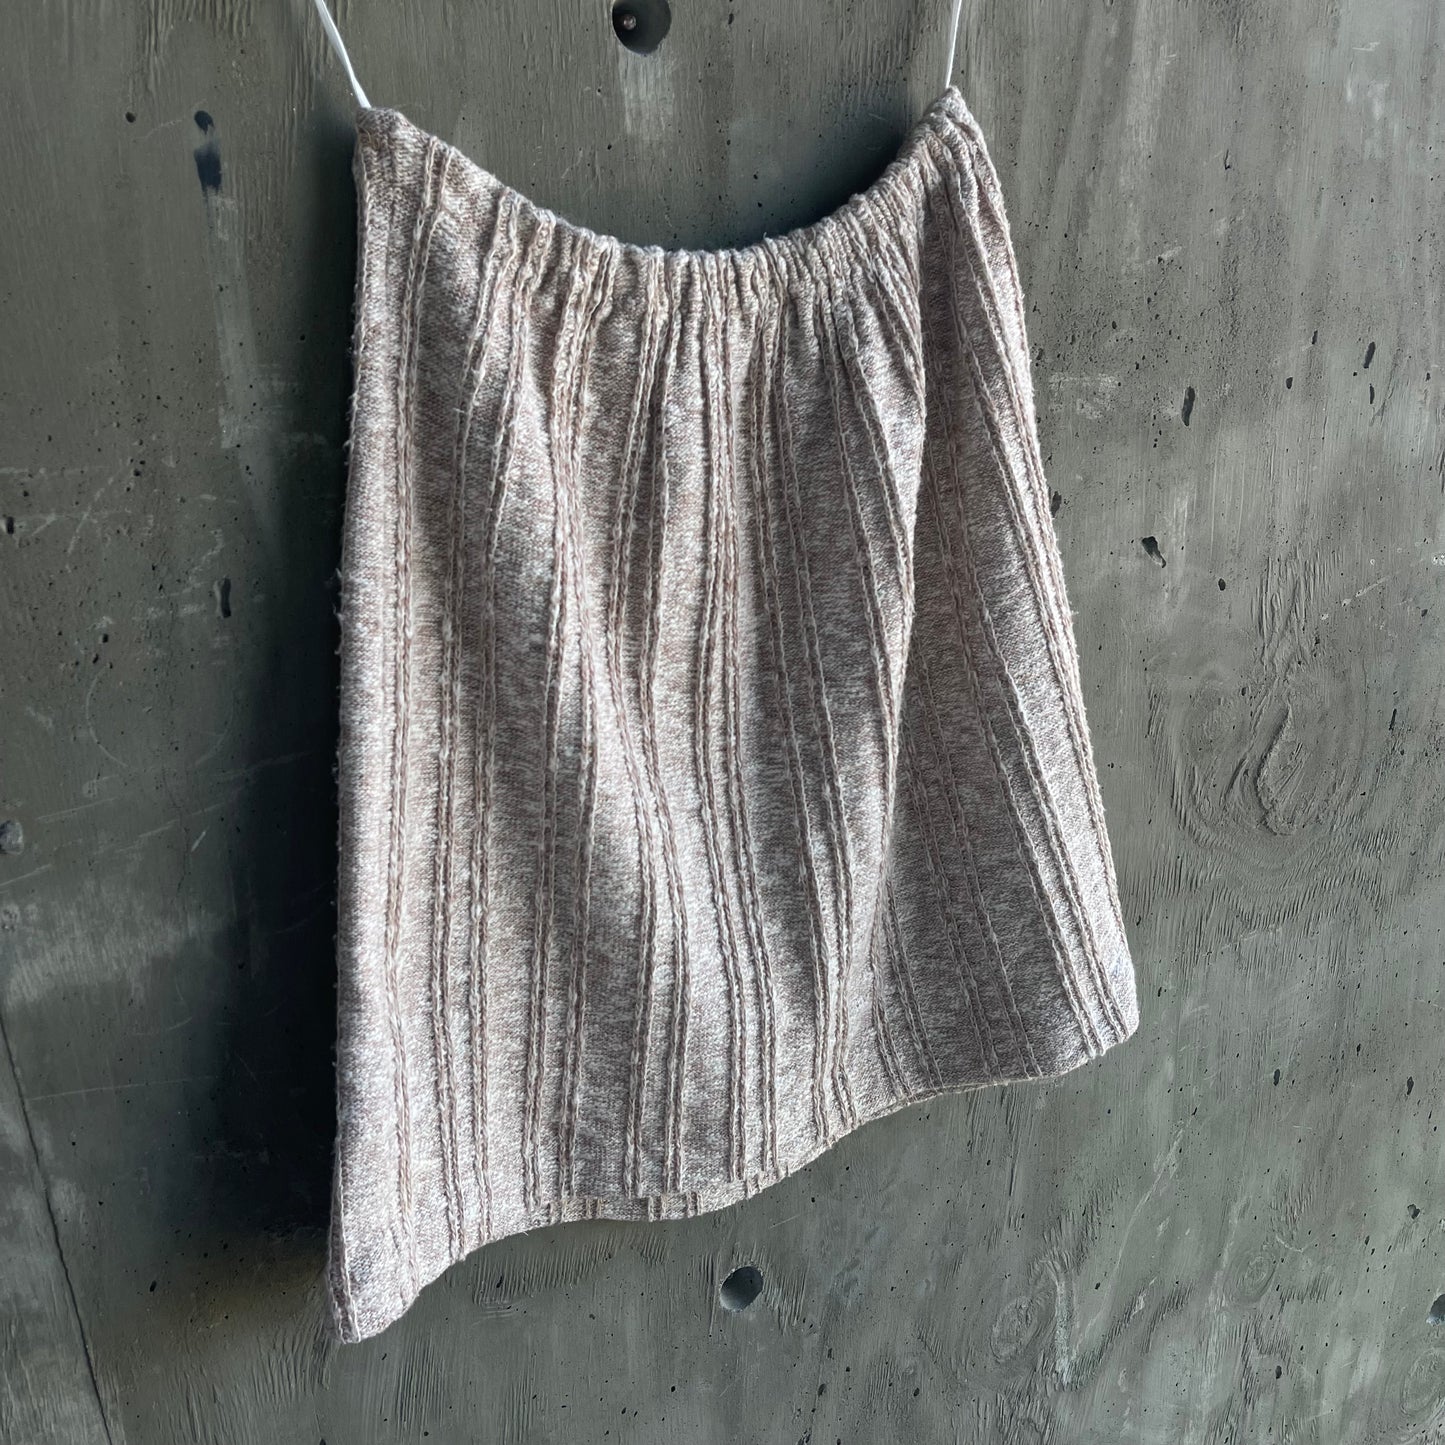 Vintage Knit Mini Skirt in Neutral Tan